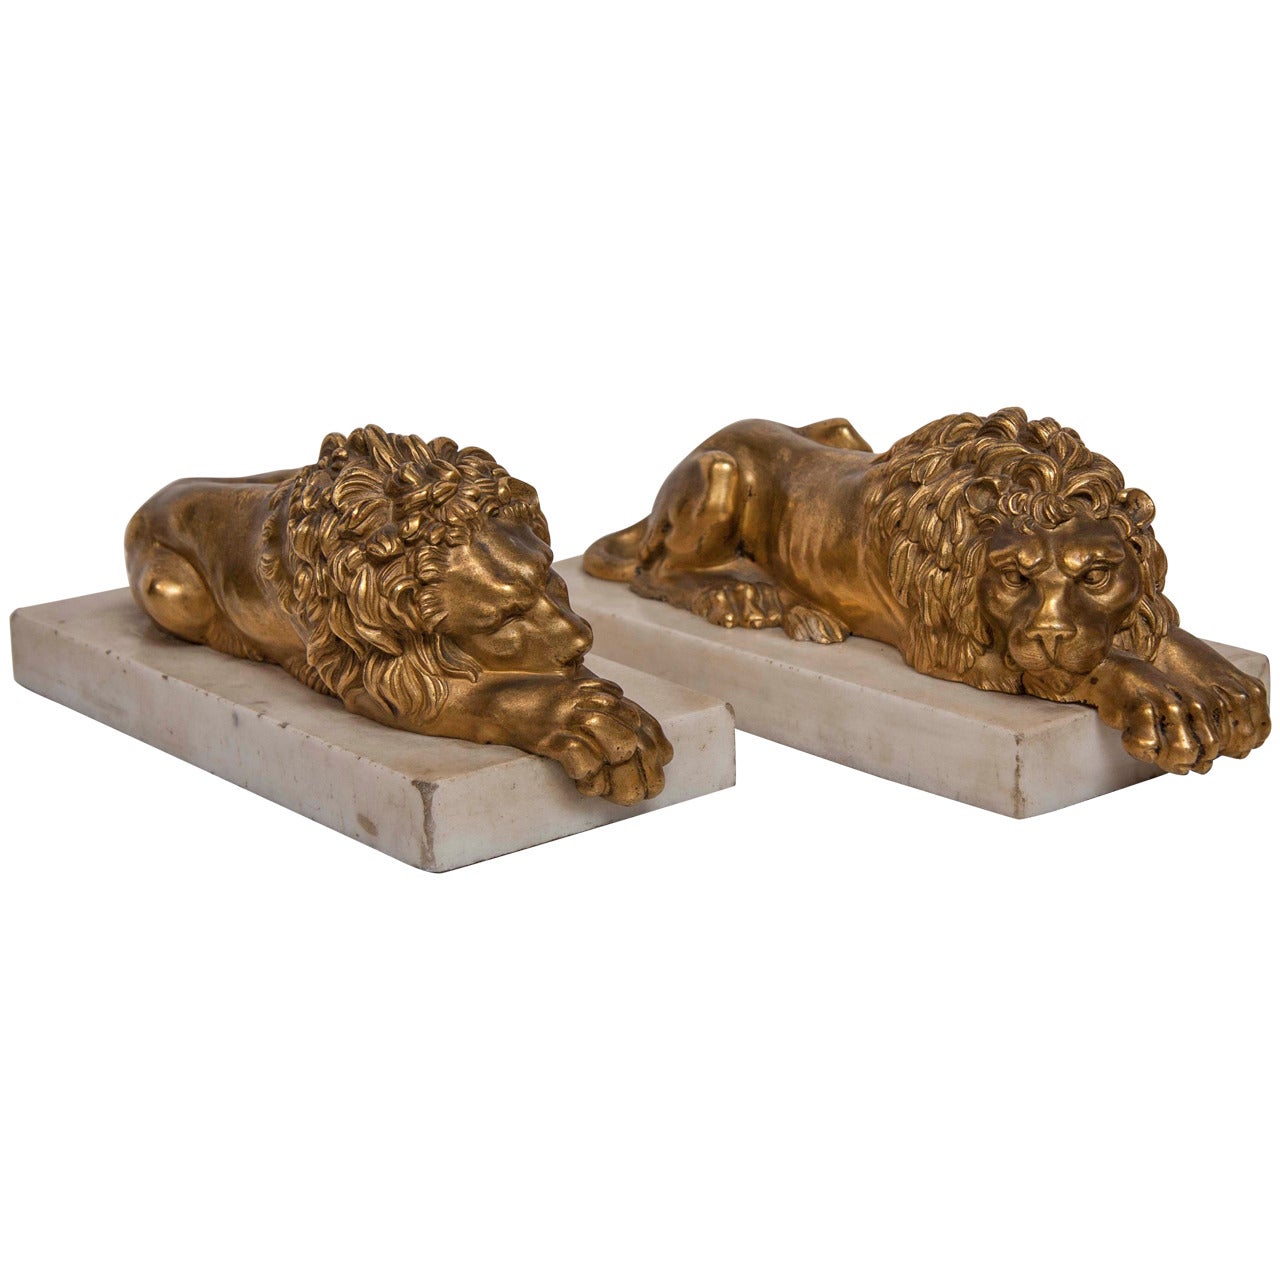 Gilt and Bronze Recumbent Lion Sculptures